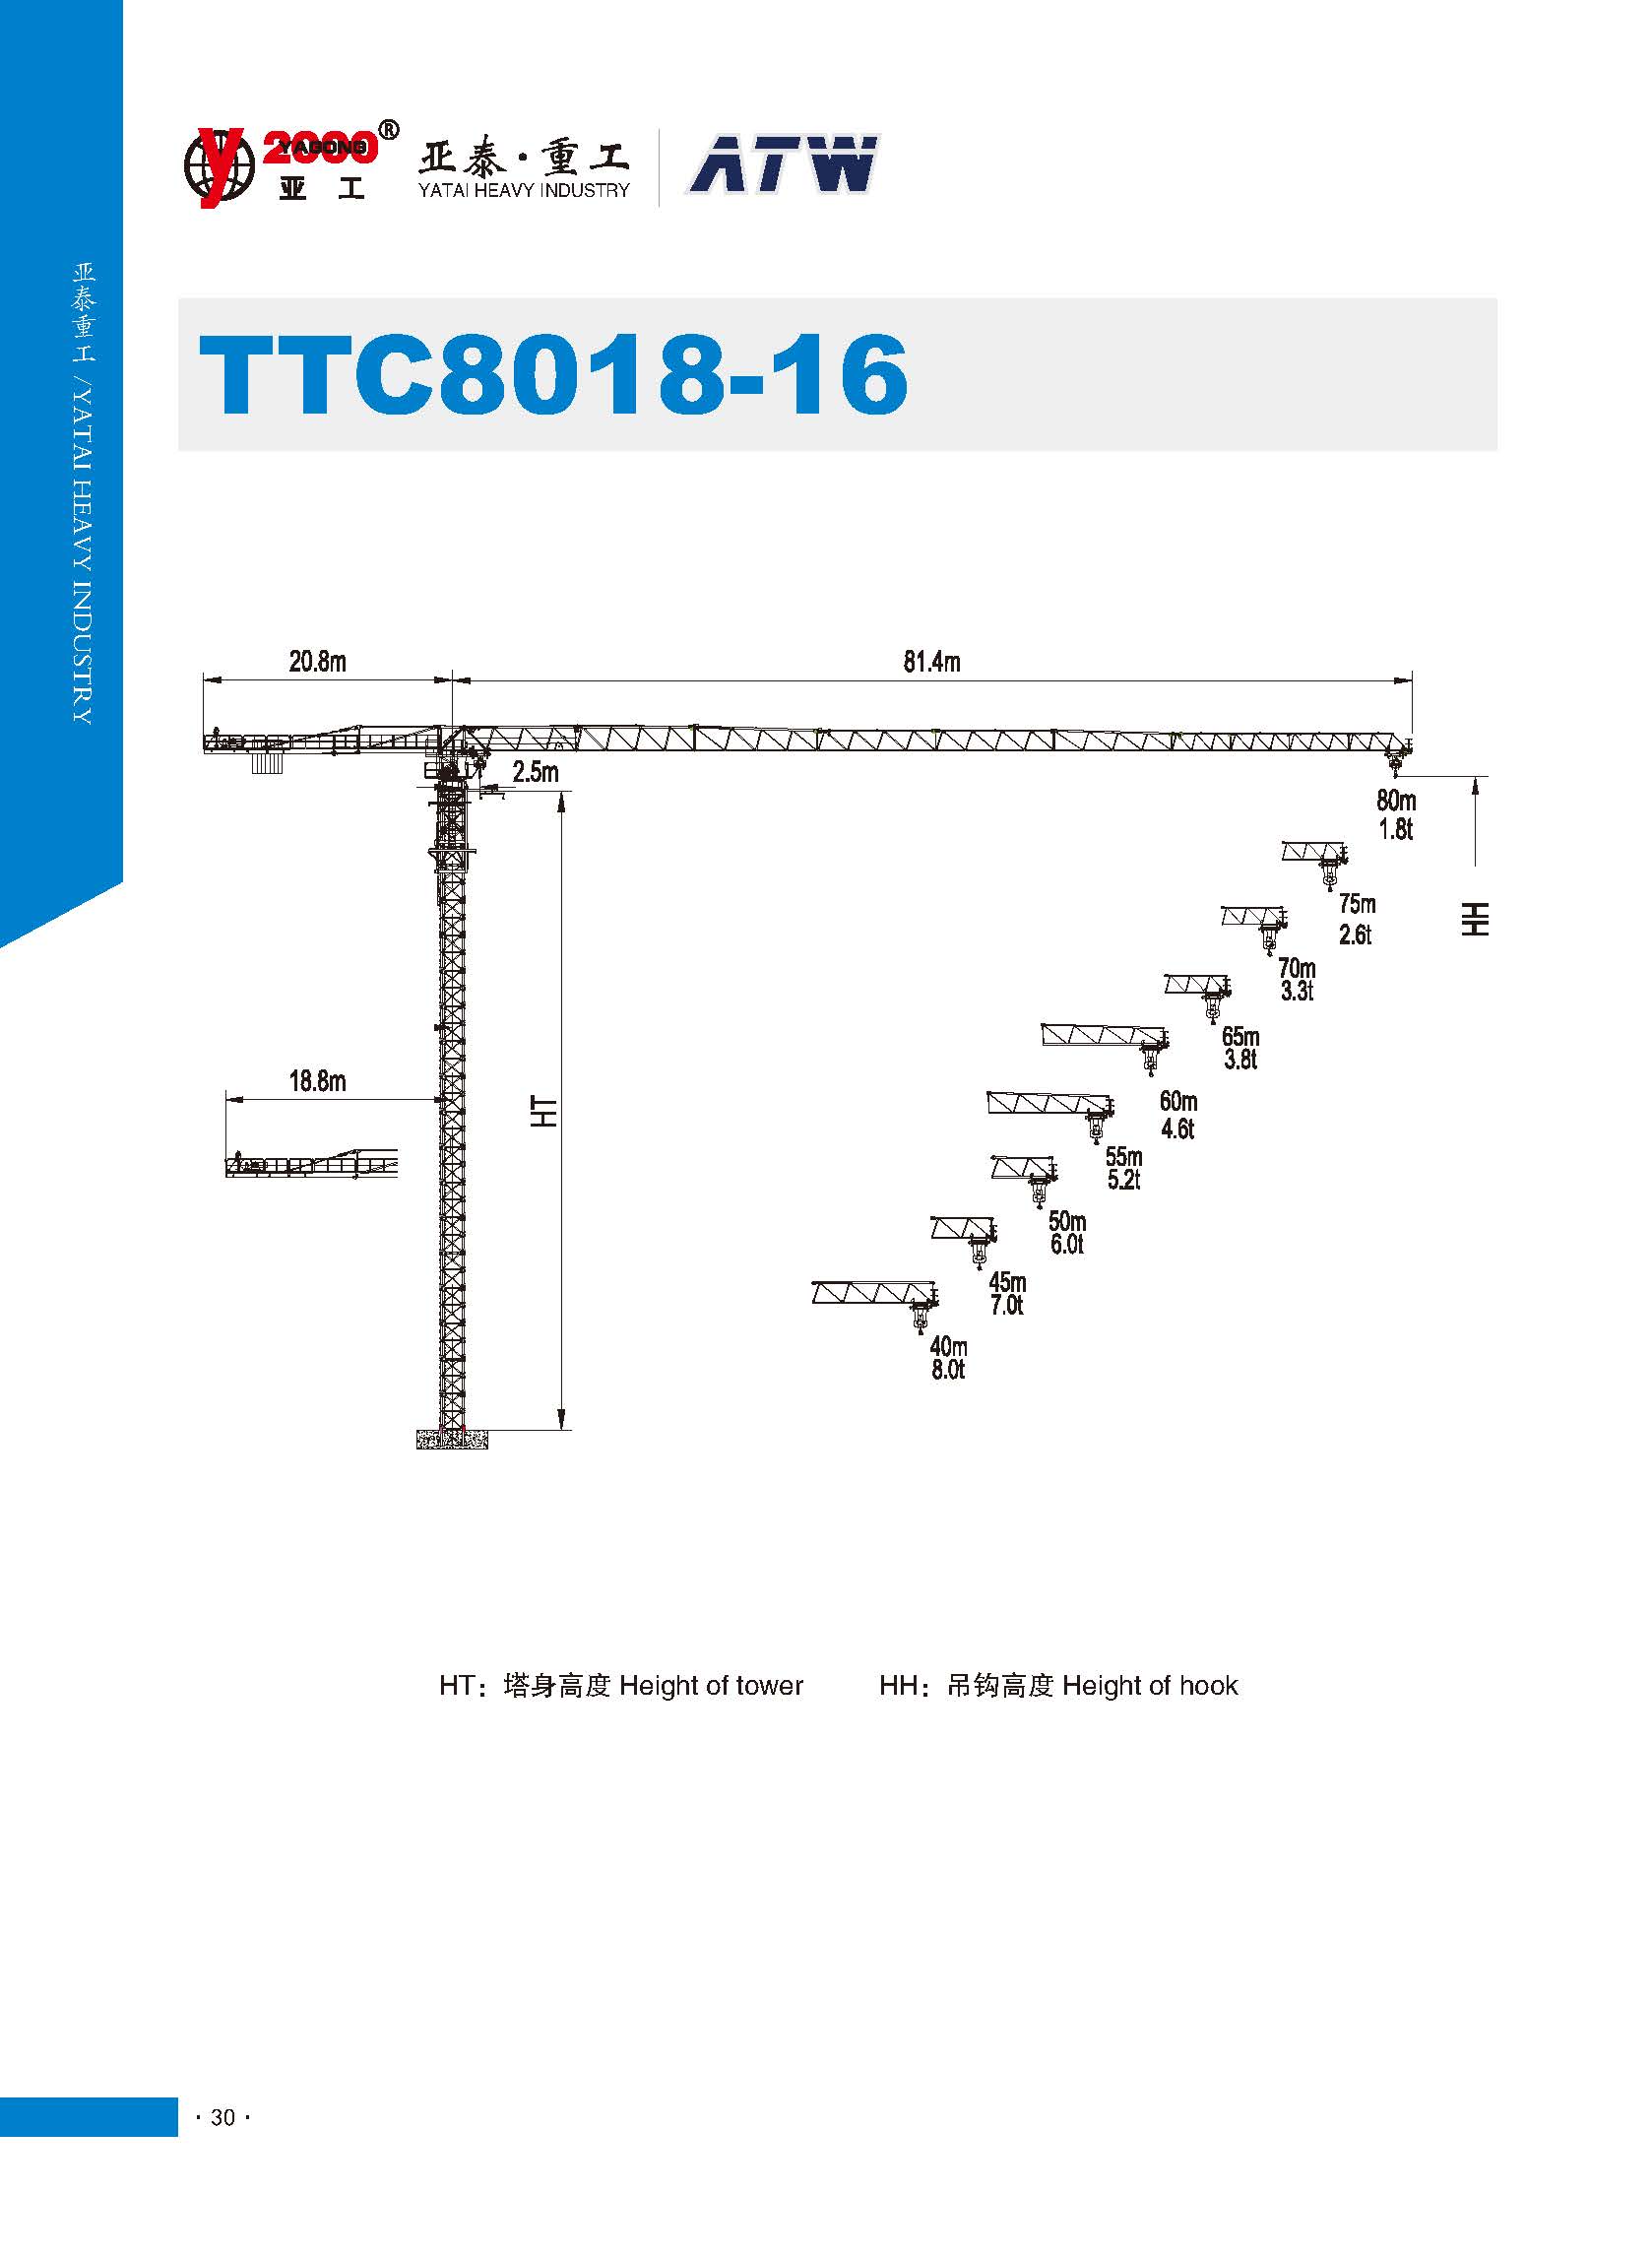 Topless Tower Crane TTC8018-16